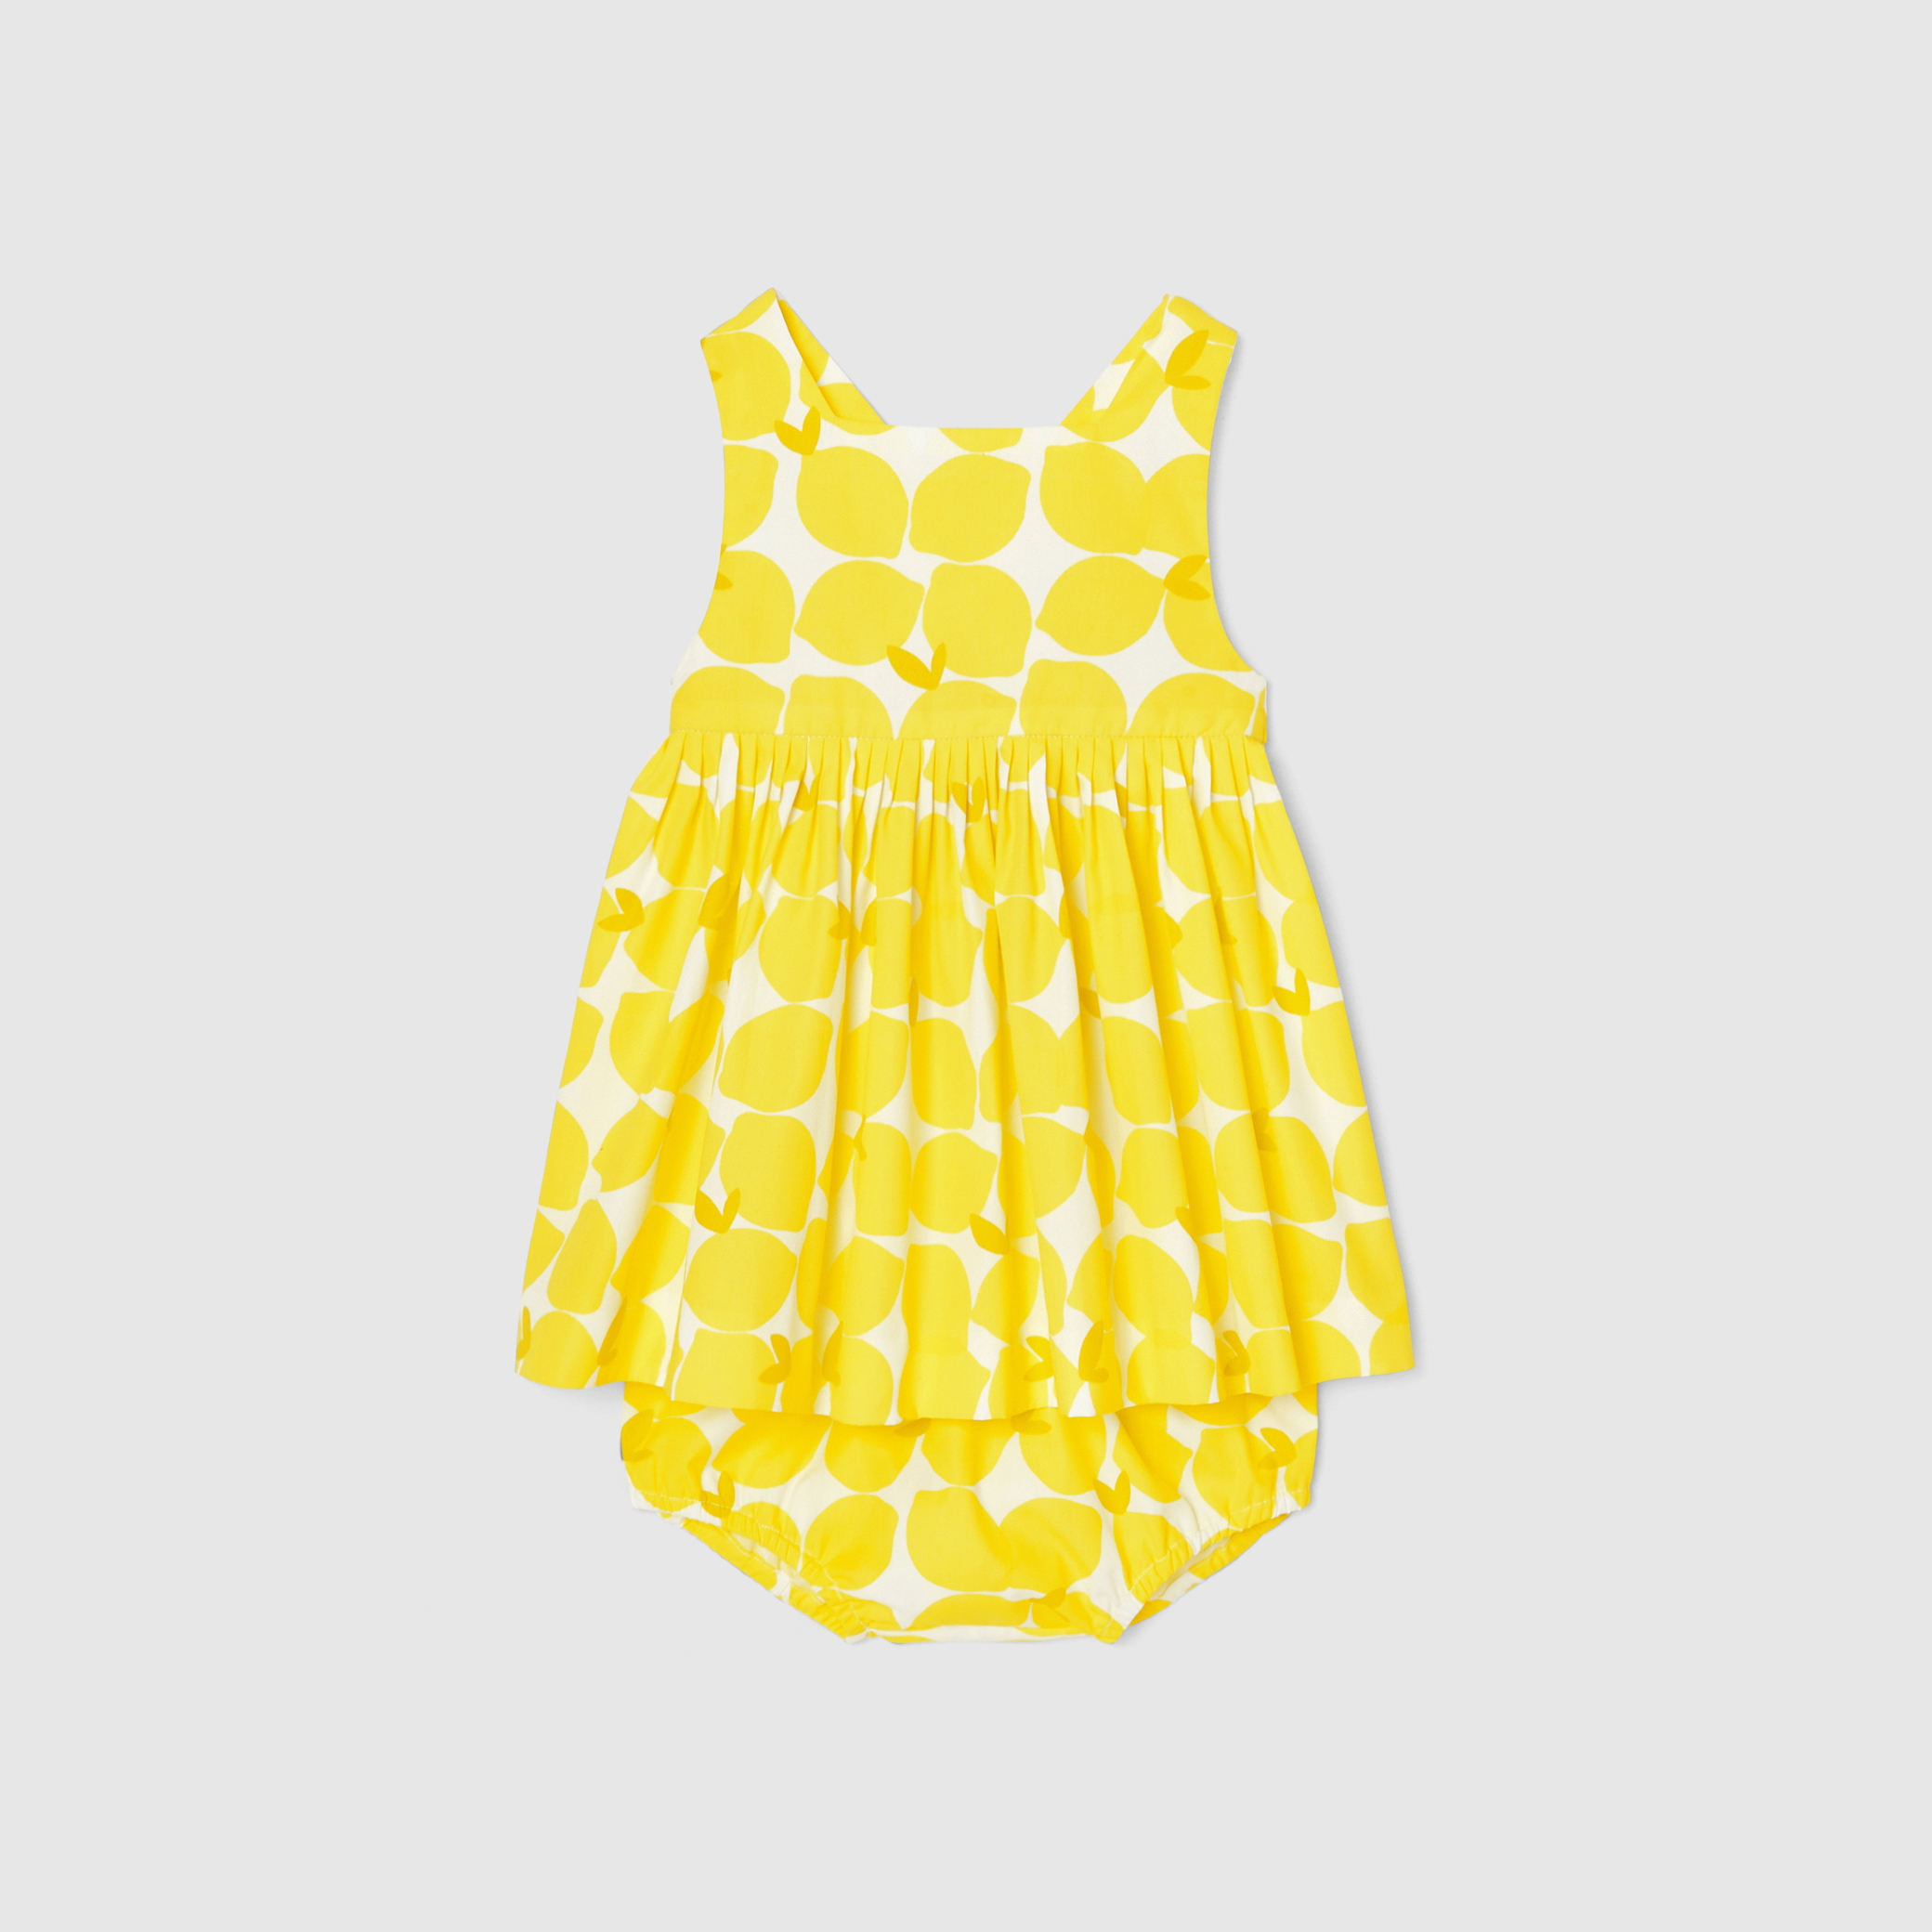 Toddler girl dress with lemon pattern